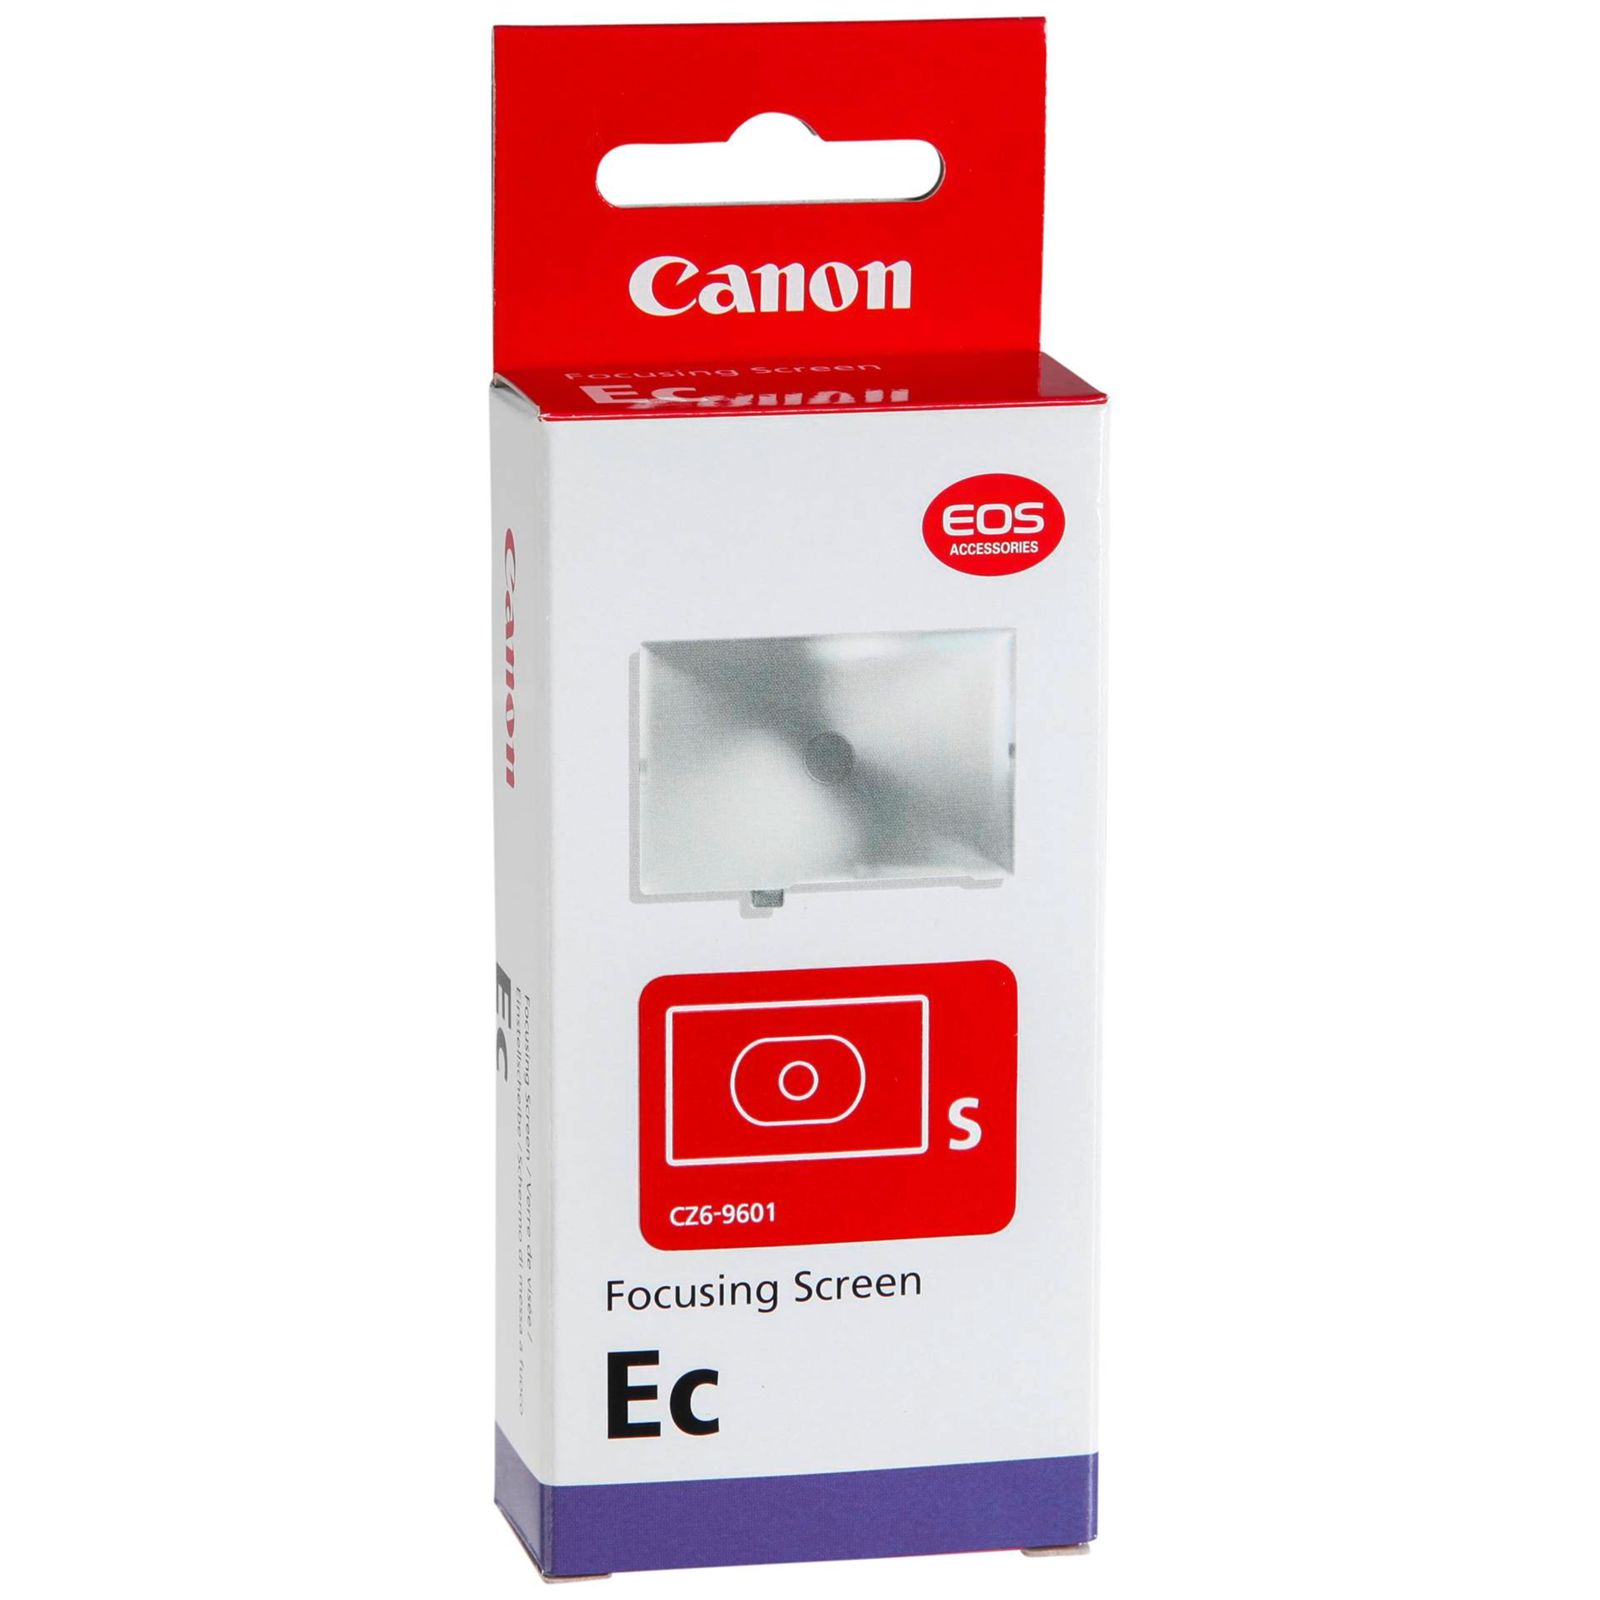 Canon focusing screen Ec-S